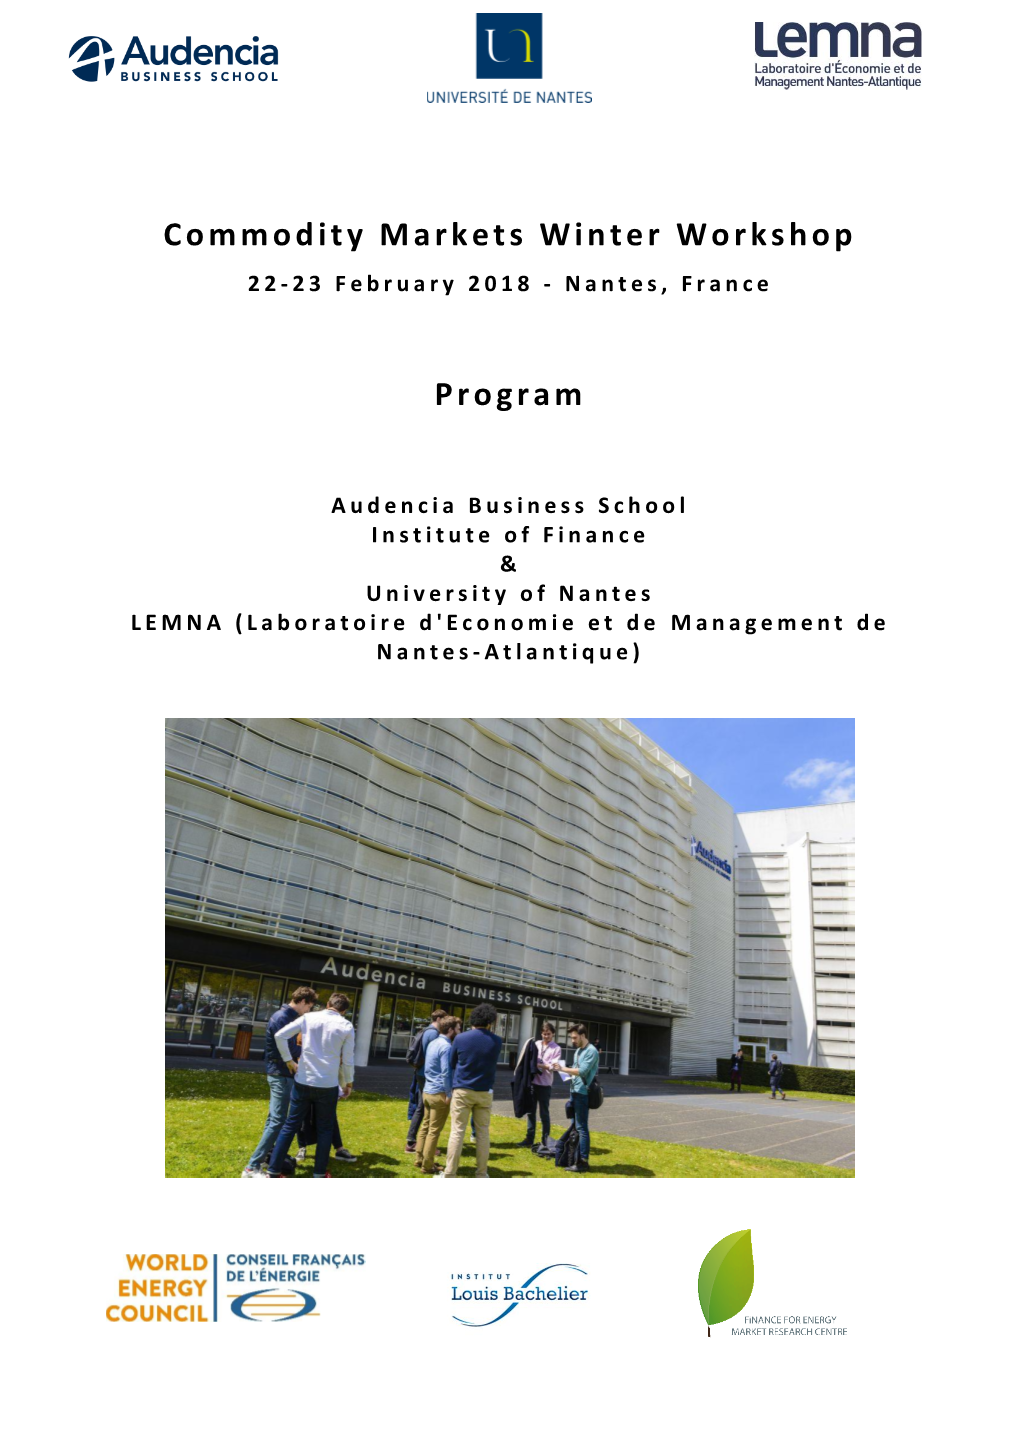 Commodity Markets Winter Workshop Program